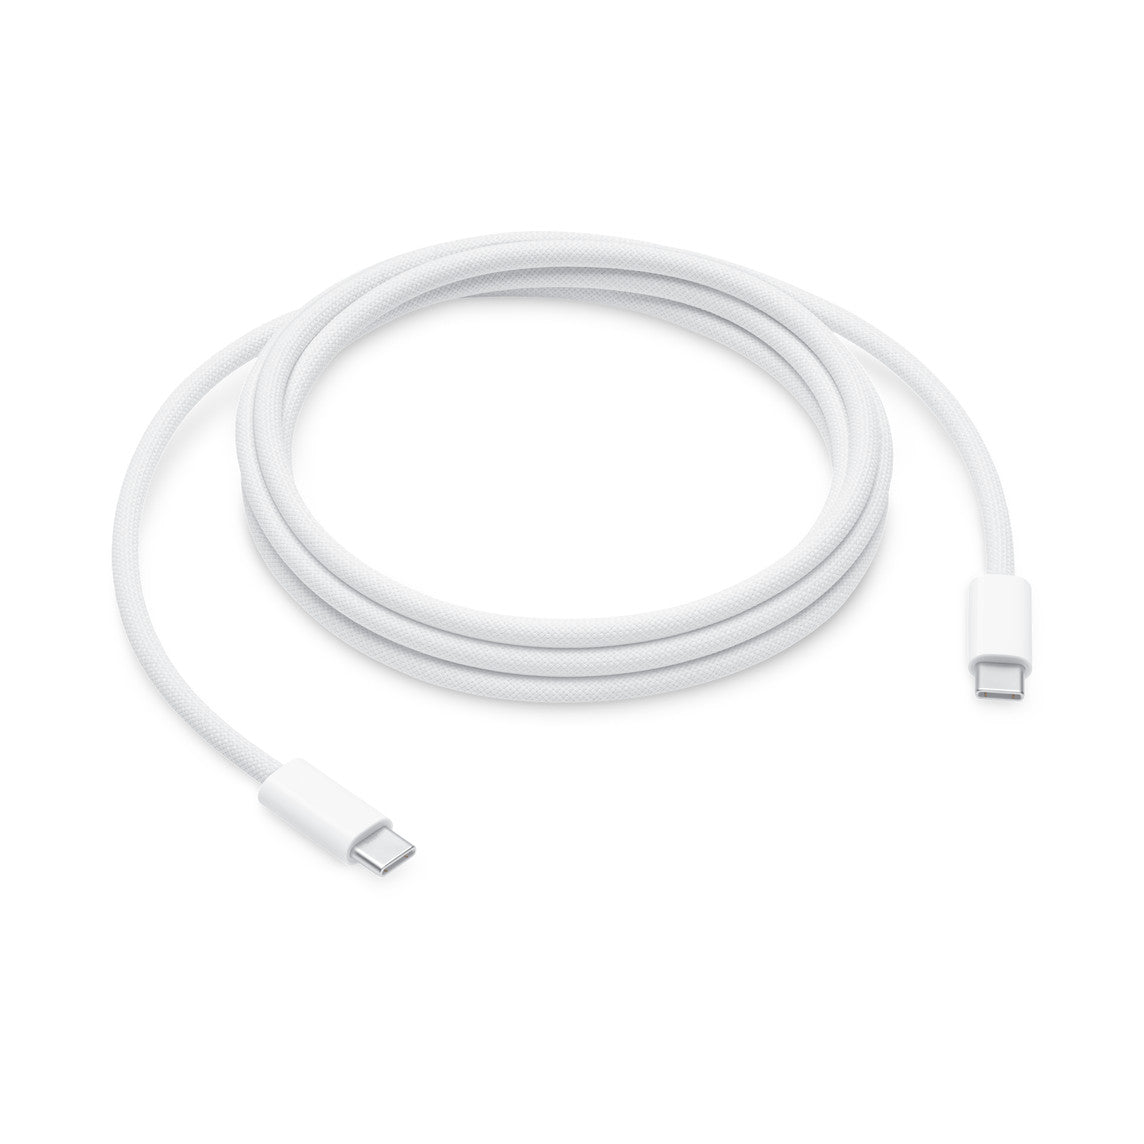 Apple Charging Block w Power Cord USB-C⚡